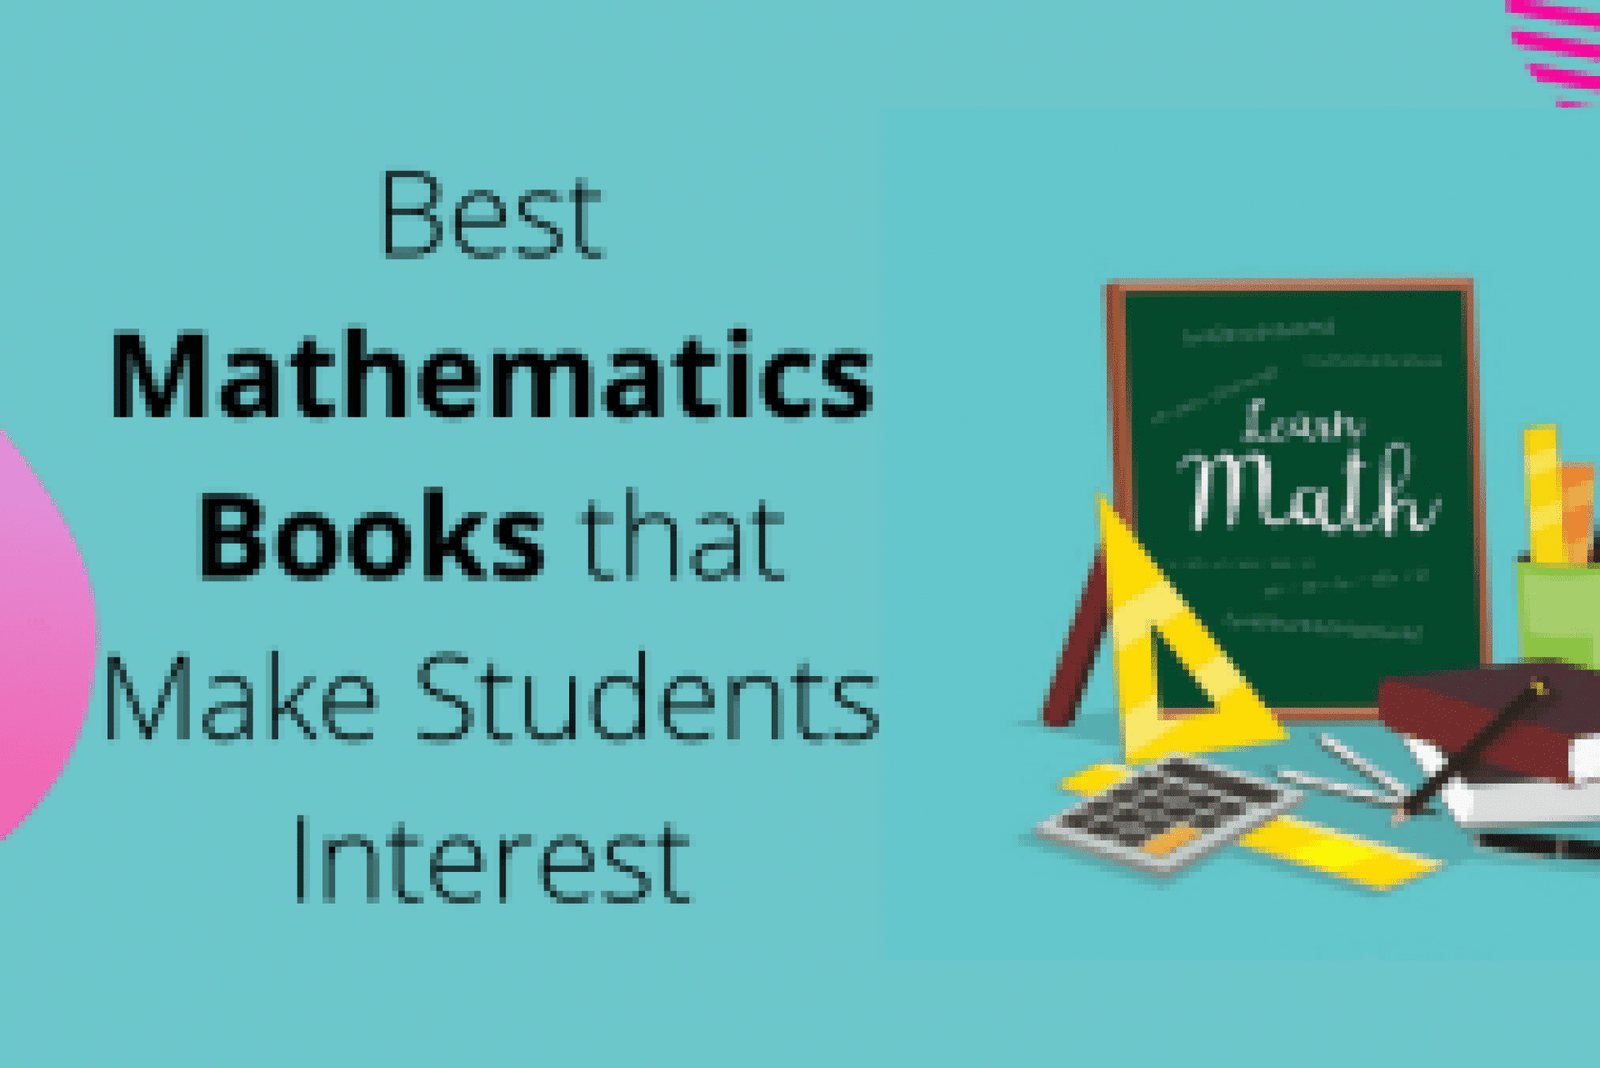 Best Mathematics Books